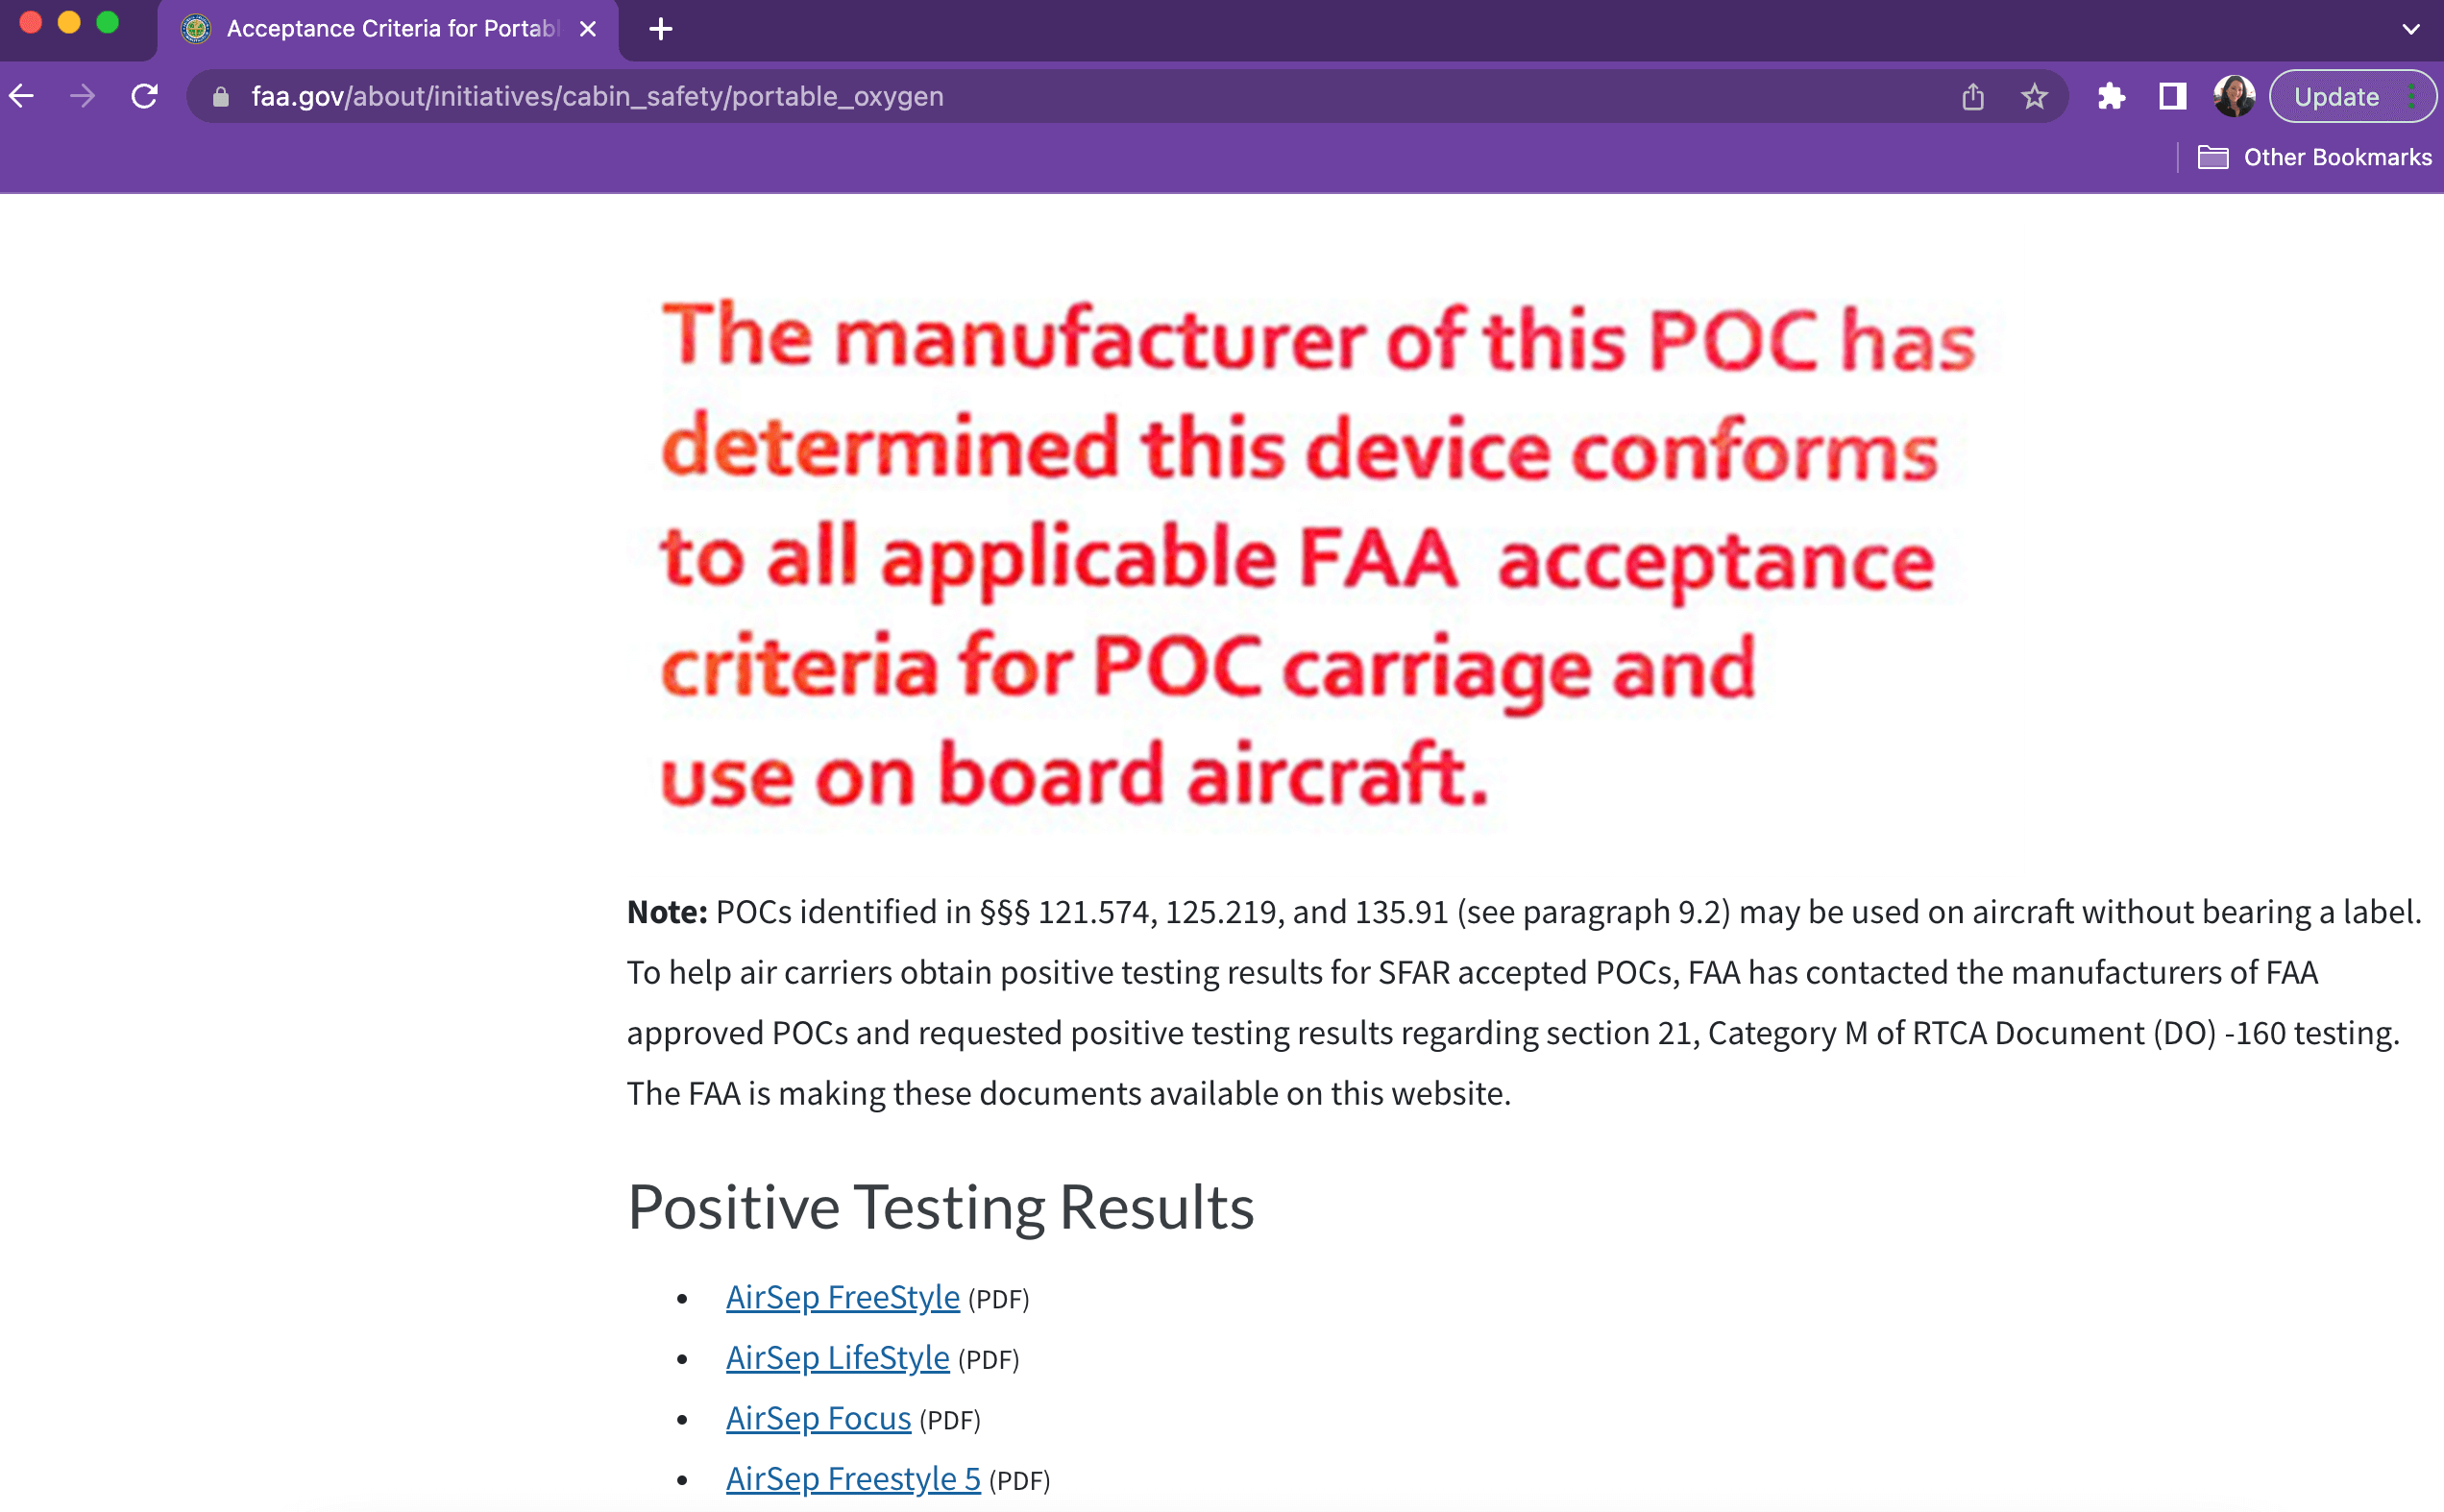 Screenshot of FAA acceptance criteria for a POC device